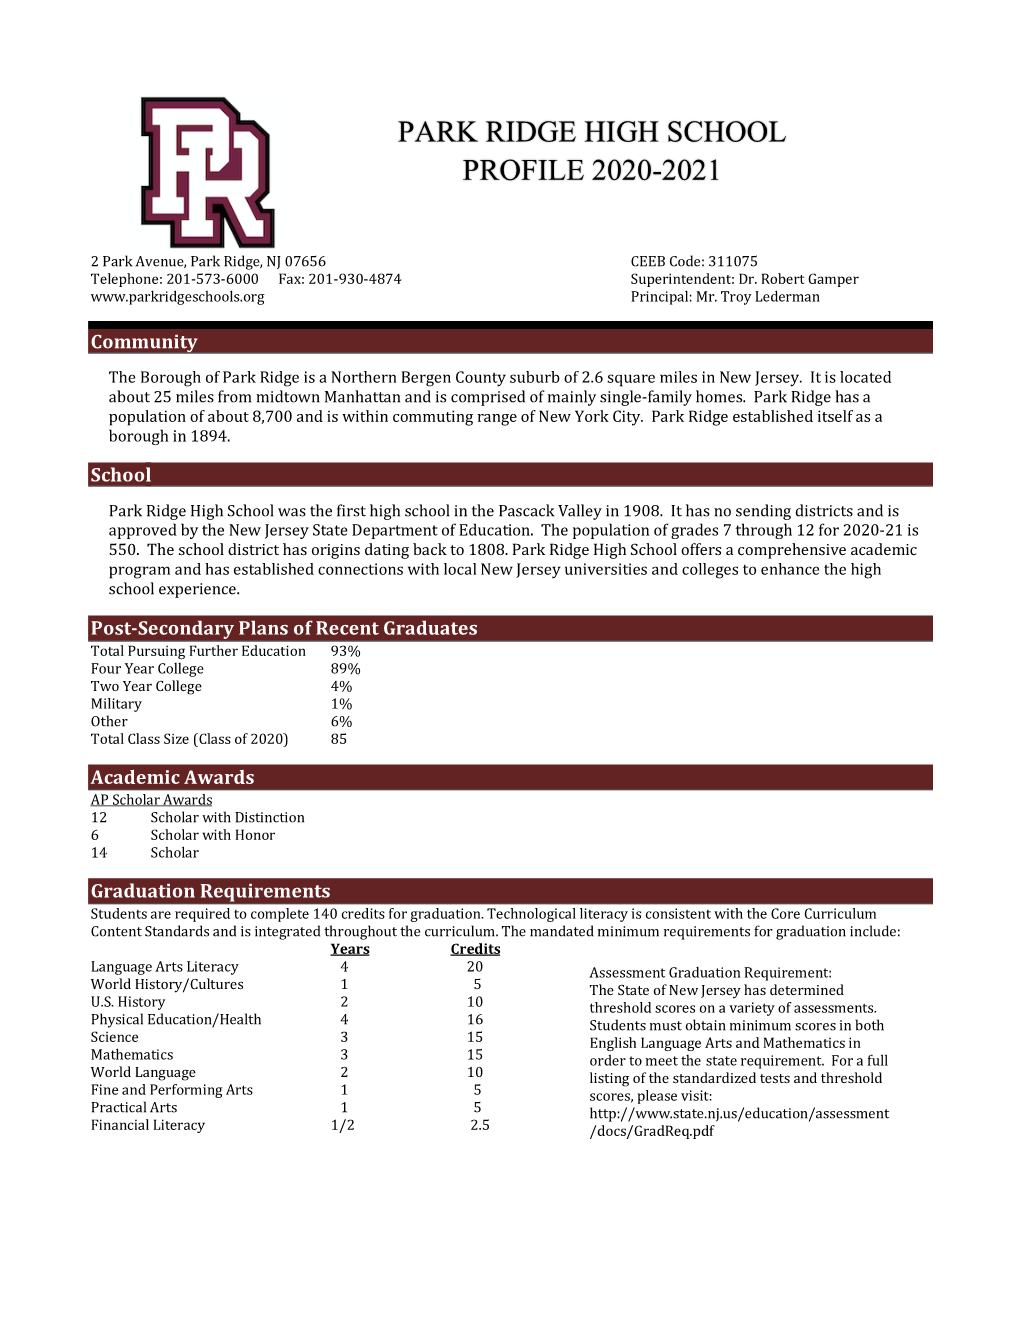 Park Ridge High School Profile 2020-2021